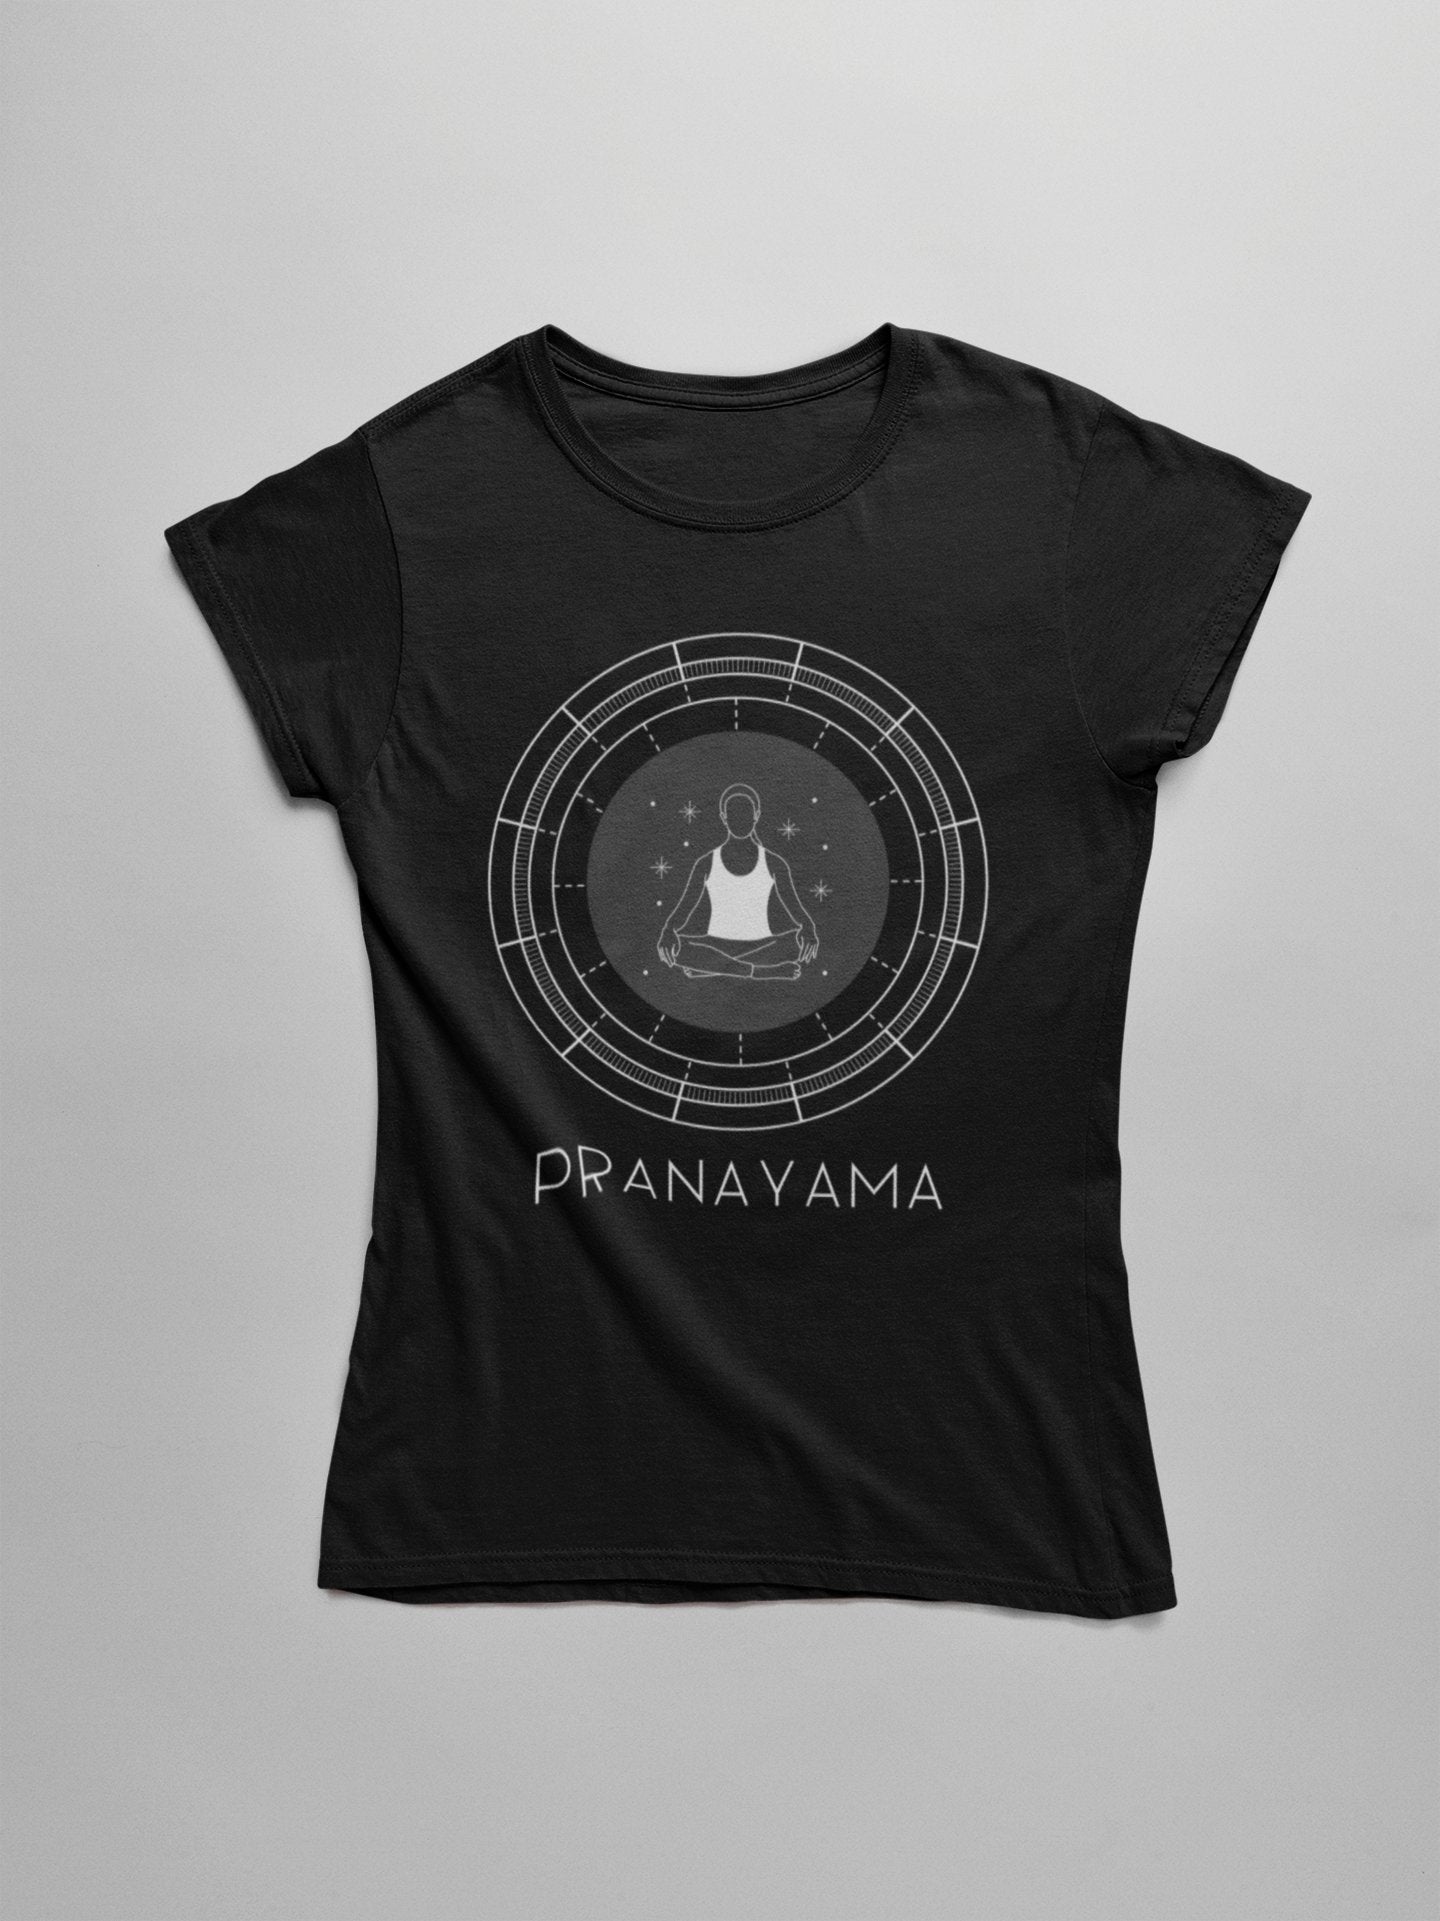 thelegalgang,Pranayama Design Yoga T shirt for Women,WOMEN.